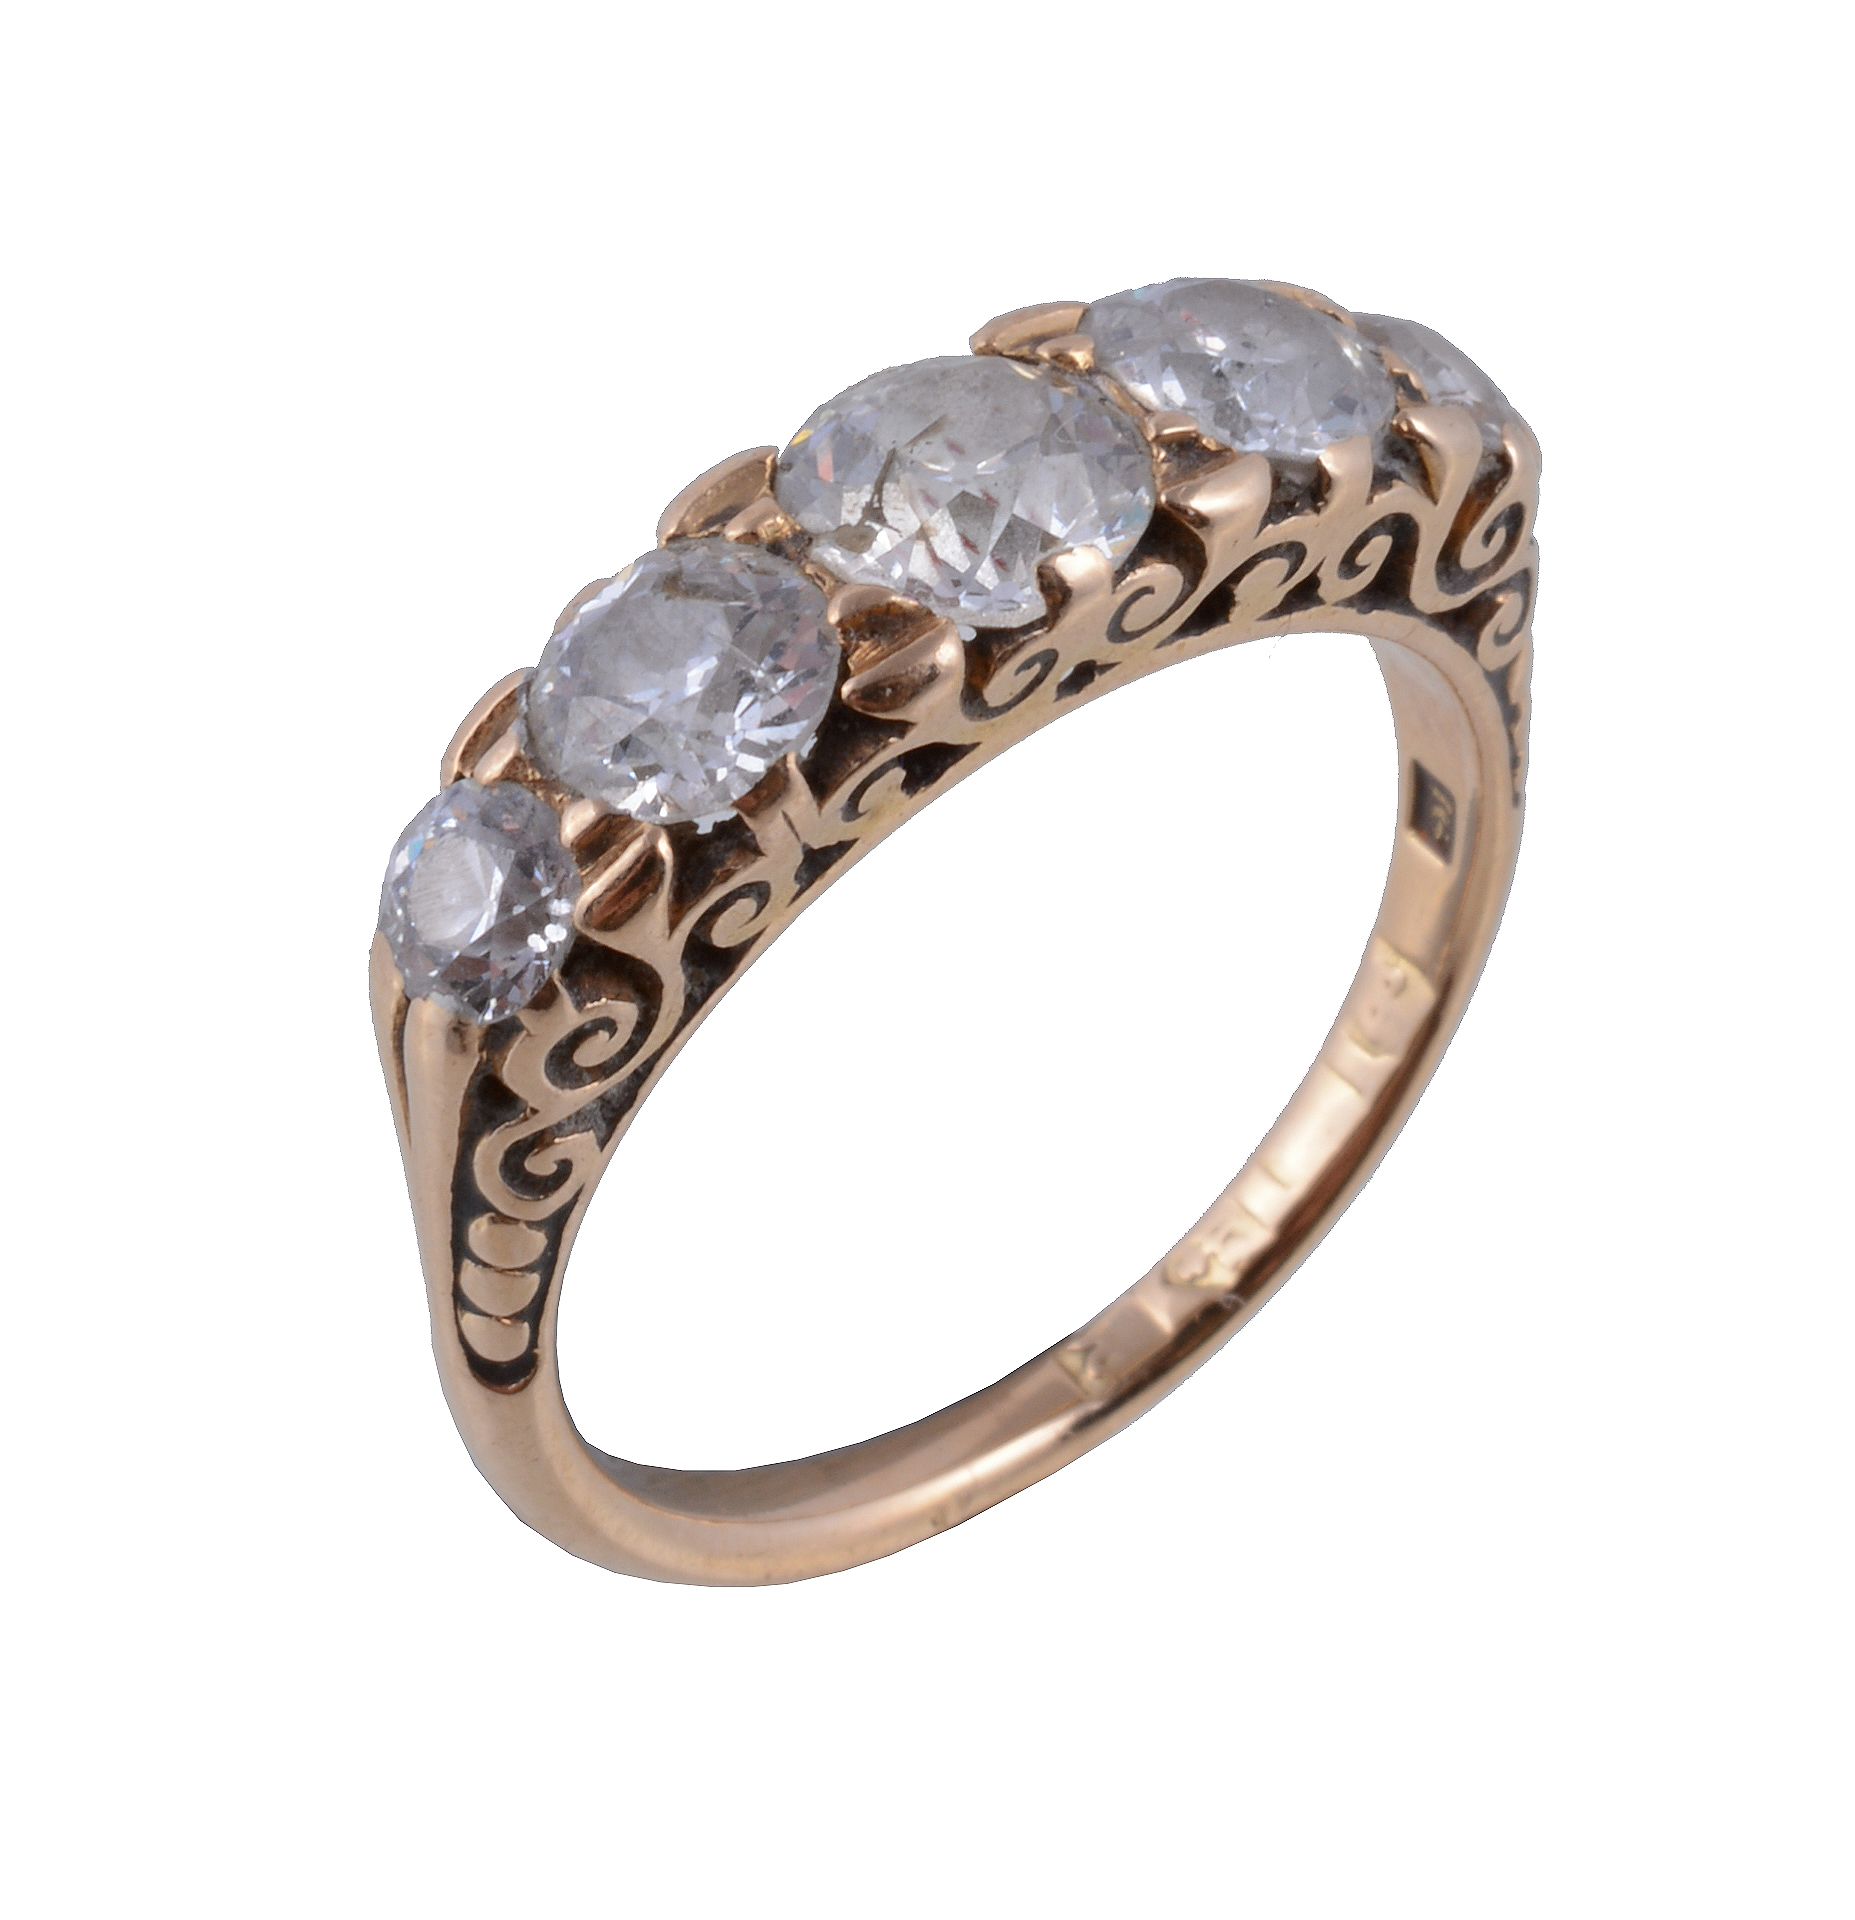 An early 20th century diamond five stone ring, the graduated old brilliant cut diamonds, estimated